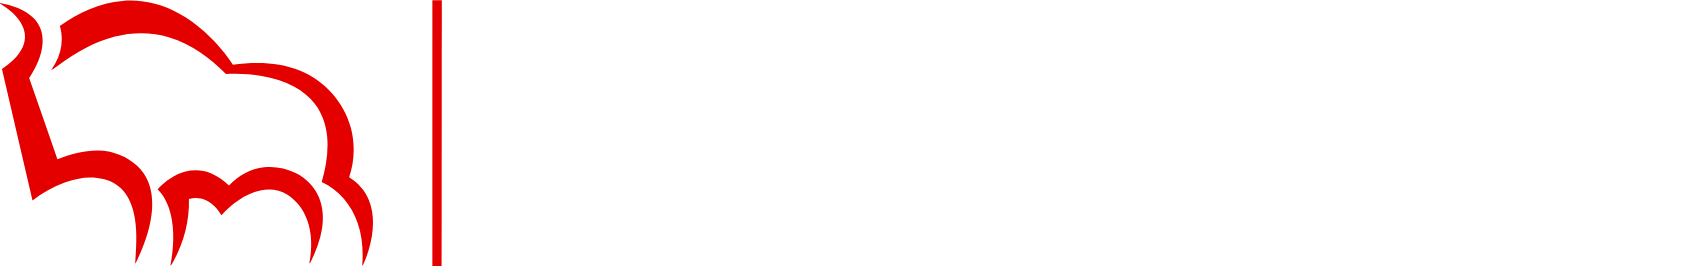 Bank Pekao (Bank Polska Kasa Opieki) Logo groß für dunkle Hintergründe (transparentes PNG)